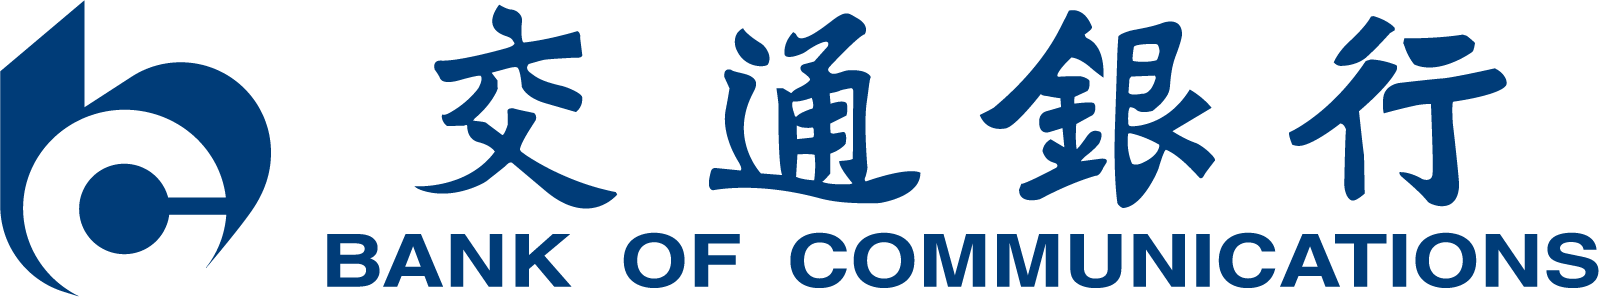 Bank of Communications Logo png